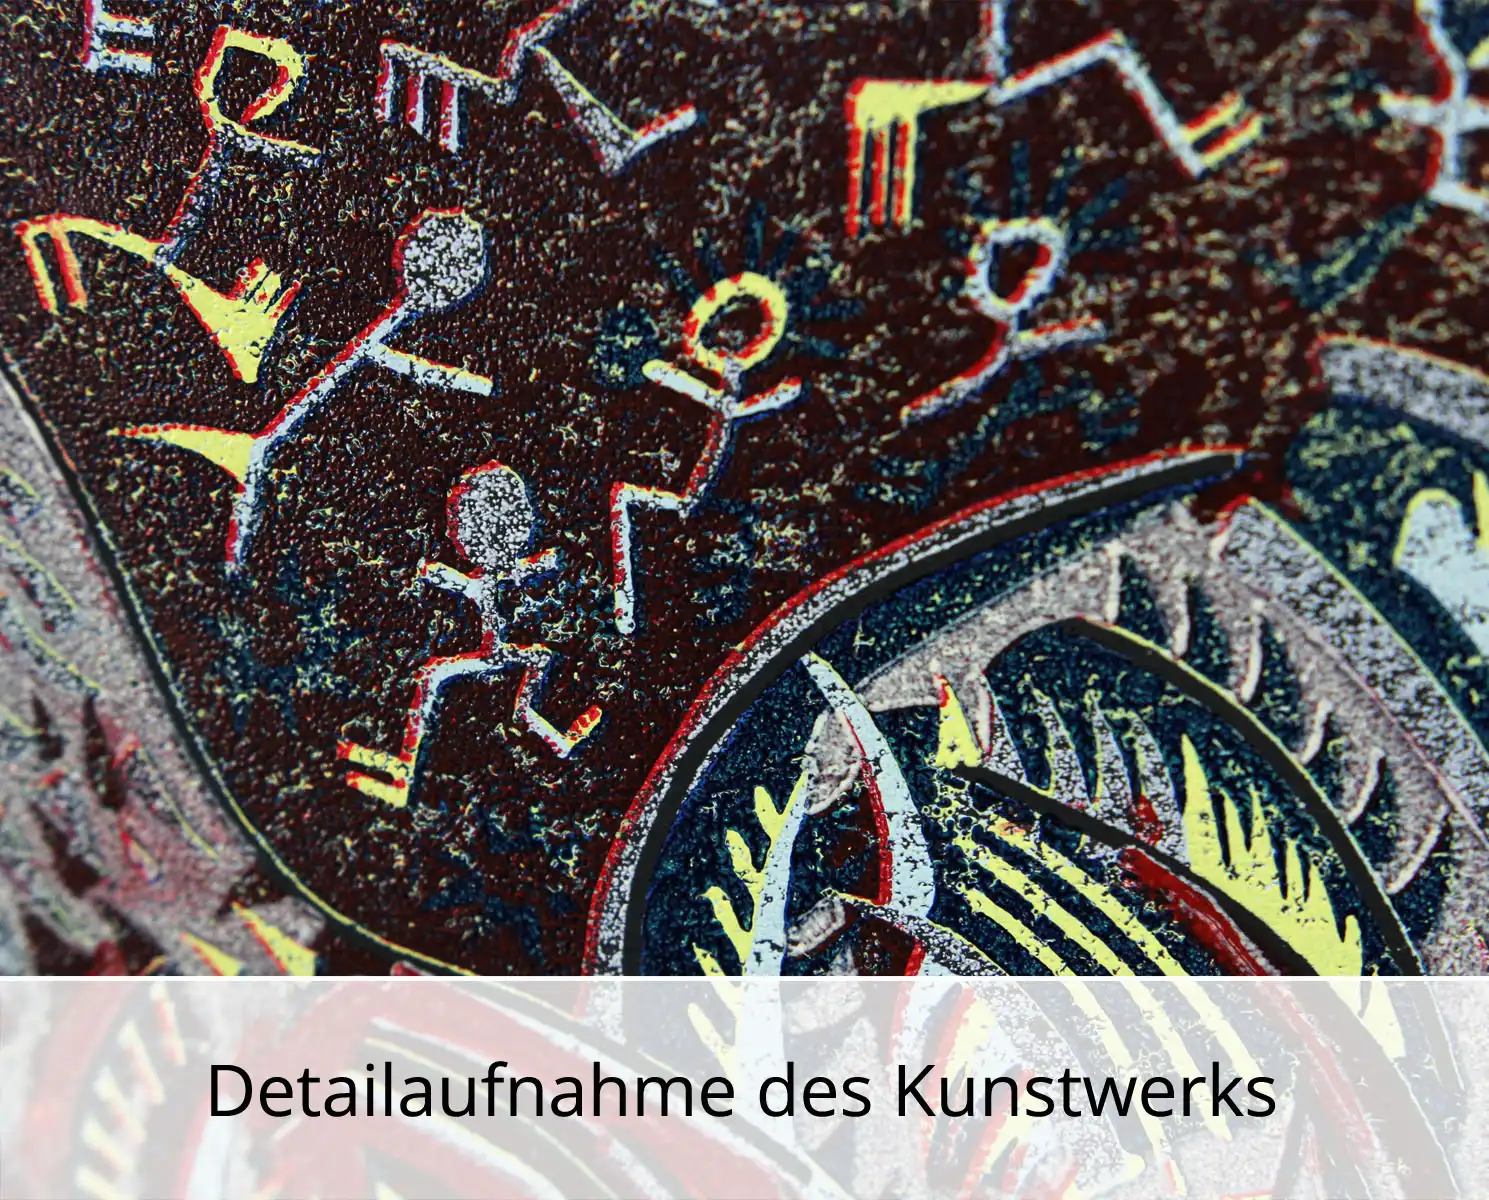 F.O. Haake: "Der Hahn - Blatt 06/10", originale Grafik/serielles Unikat, mehrfarbiger Linoldruck